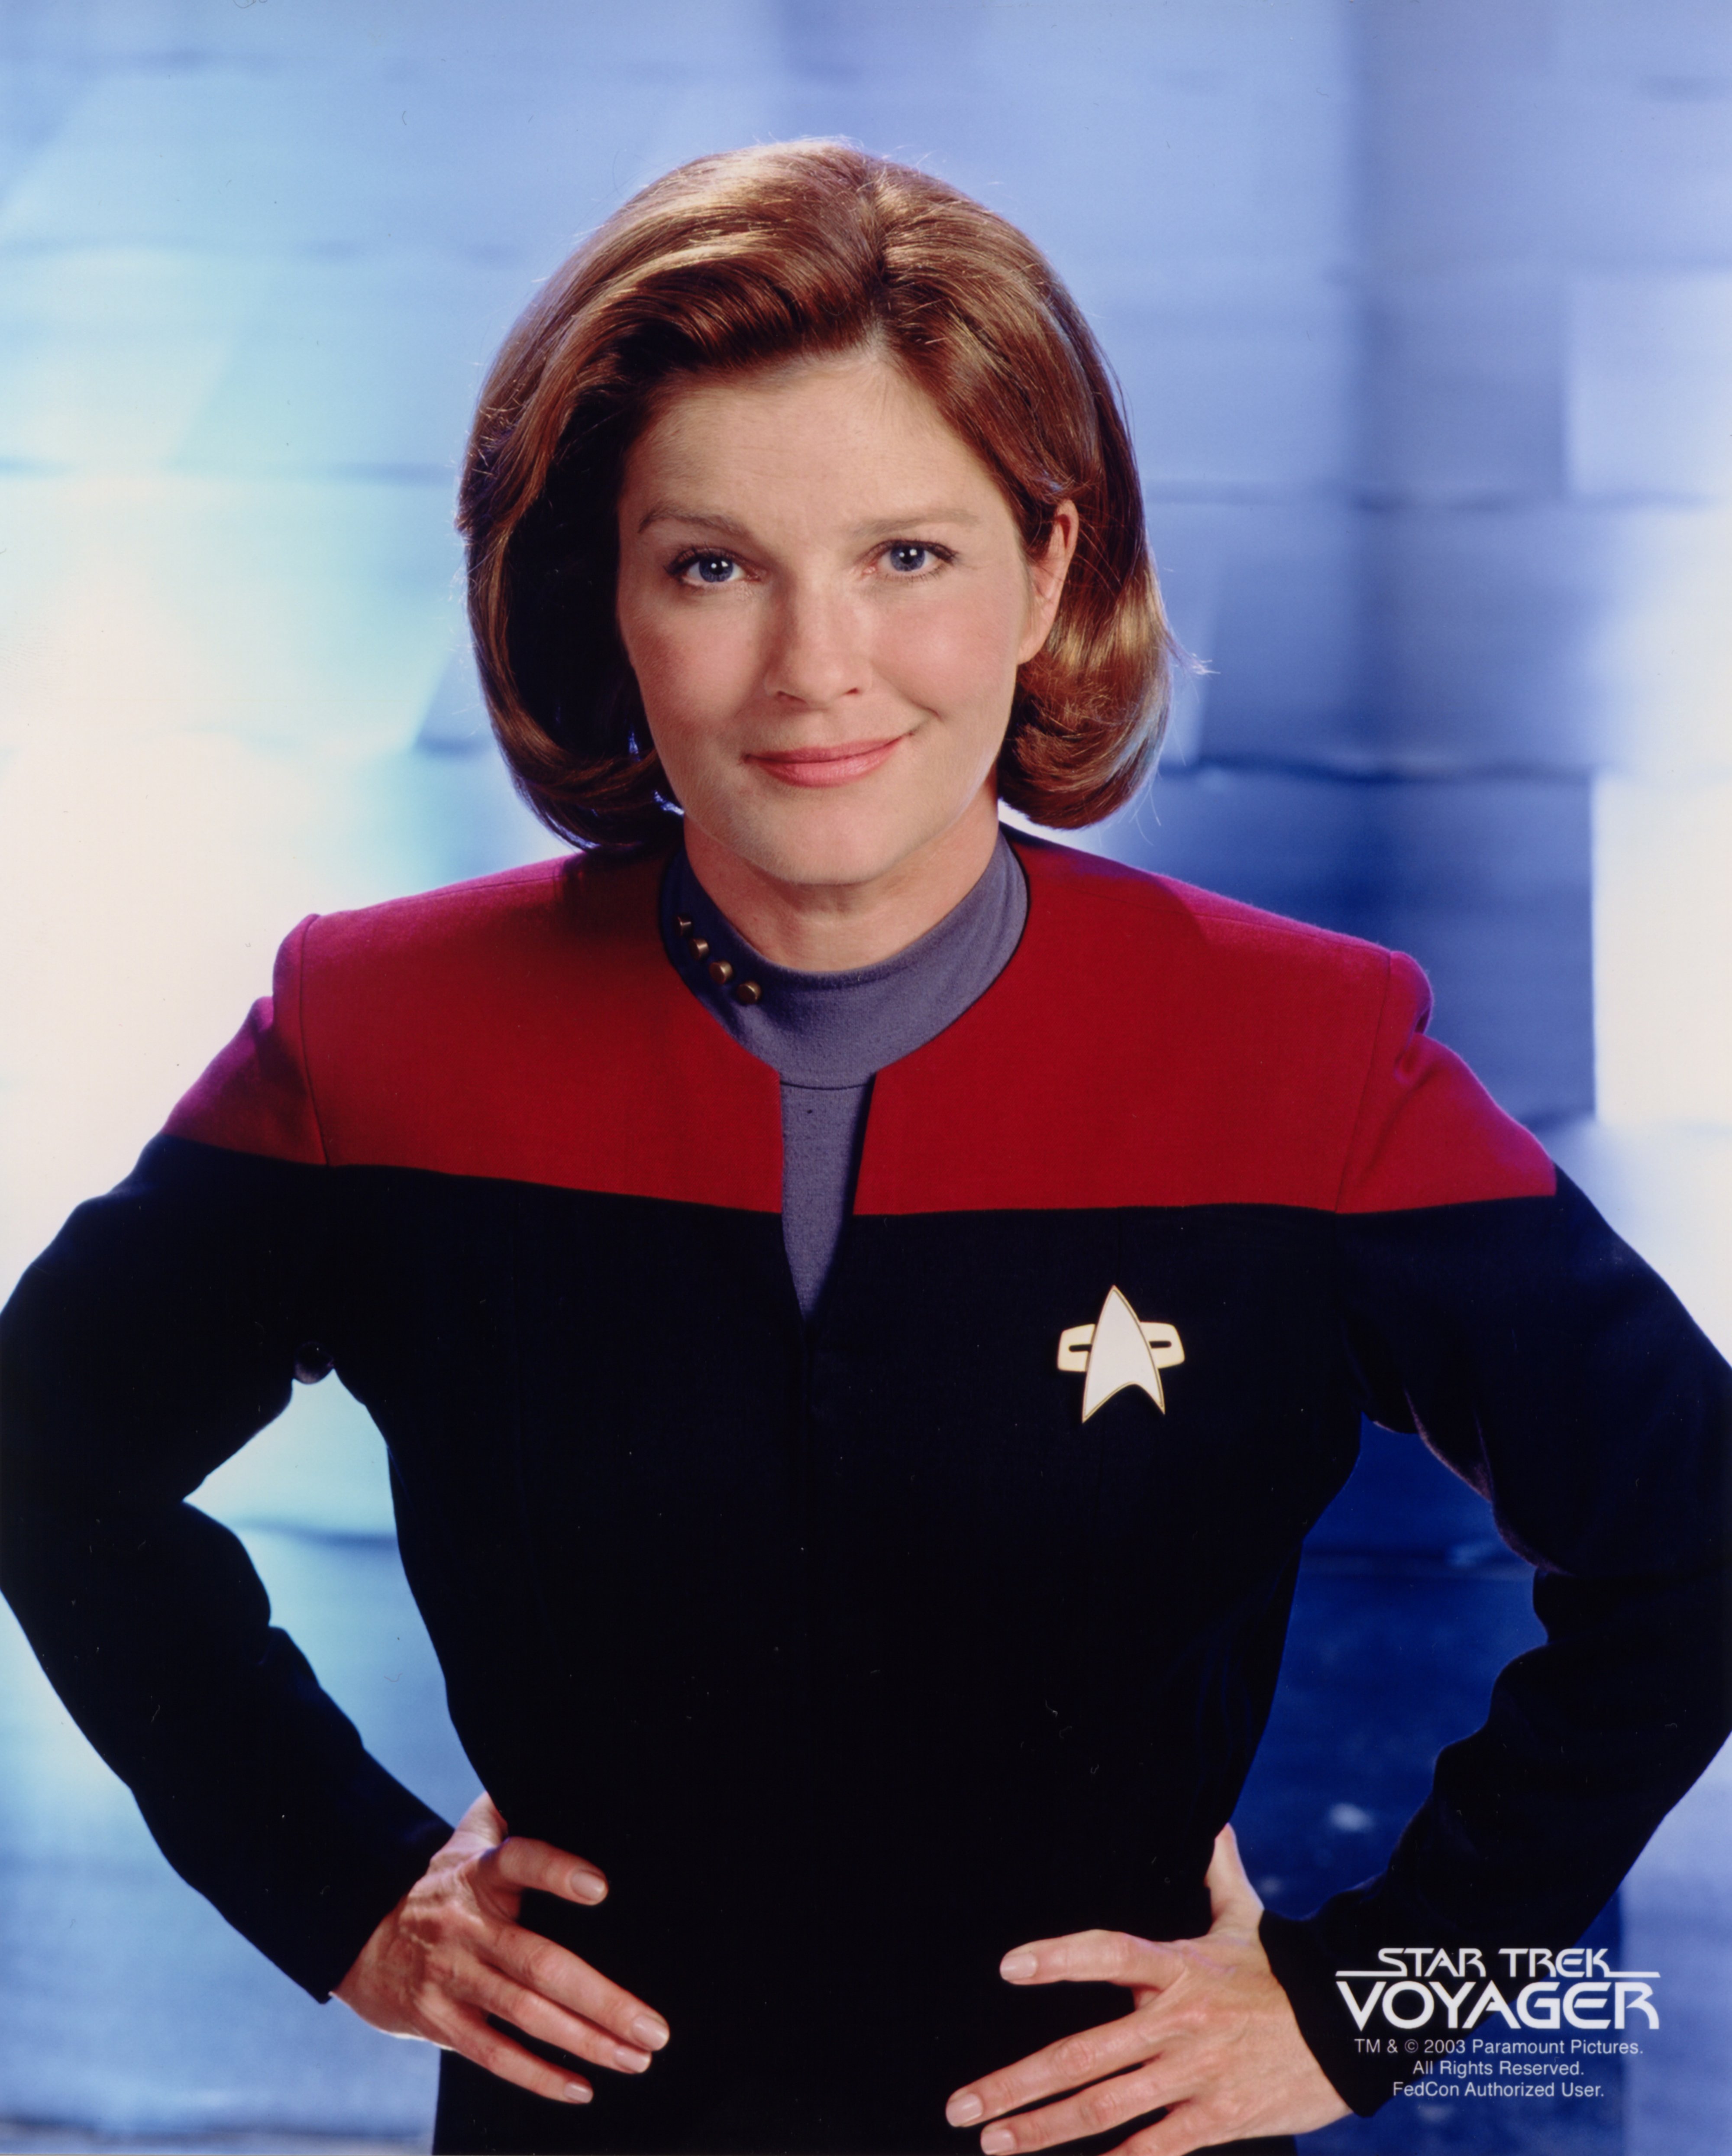 капитан, Кейт Малгрю, Кэтрин Janeway, Star Trek Voyager - обои на рабочий стол